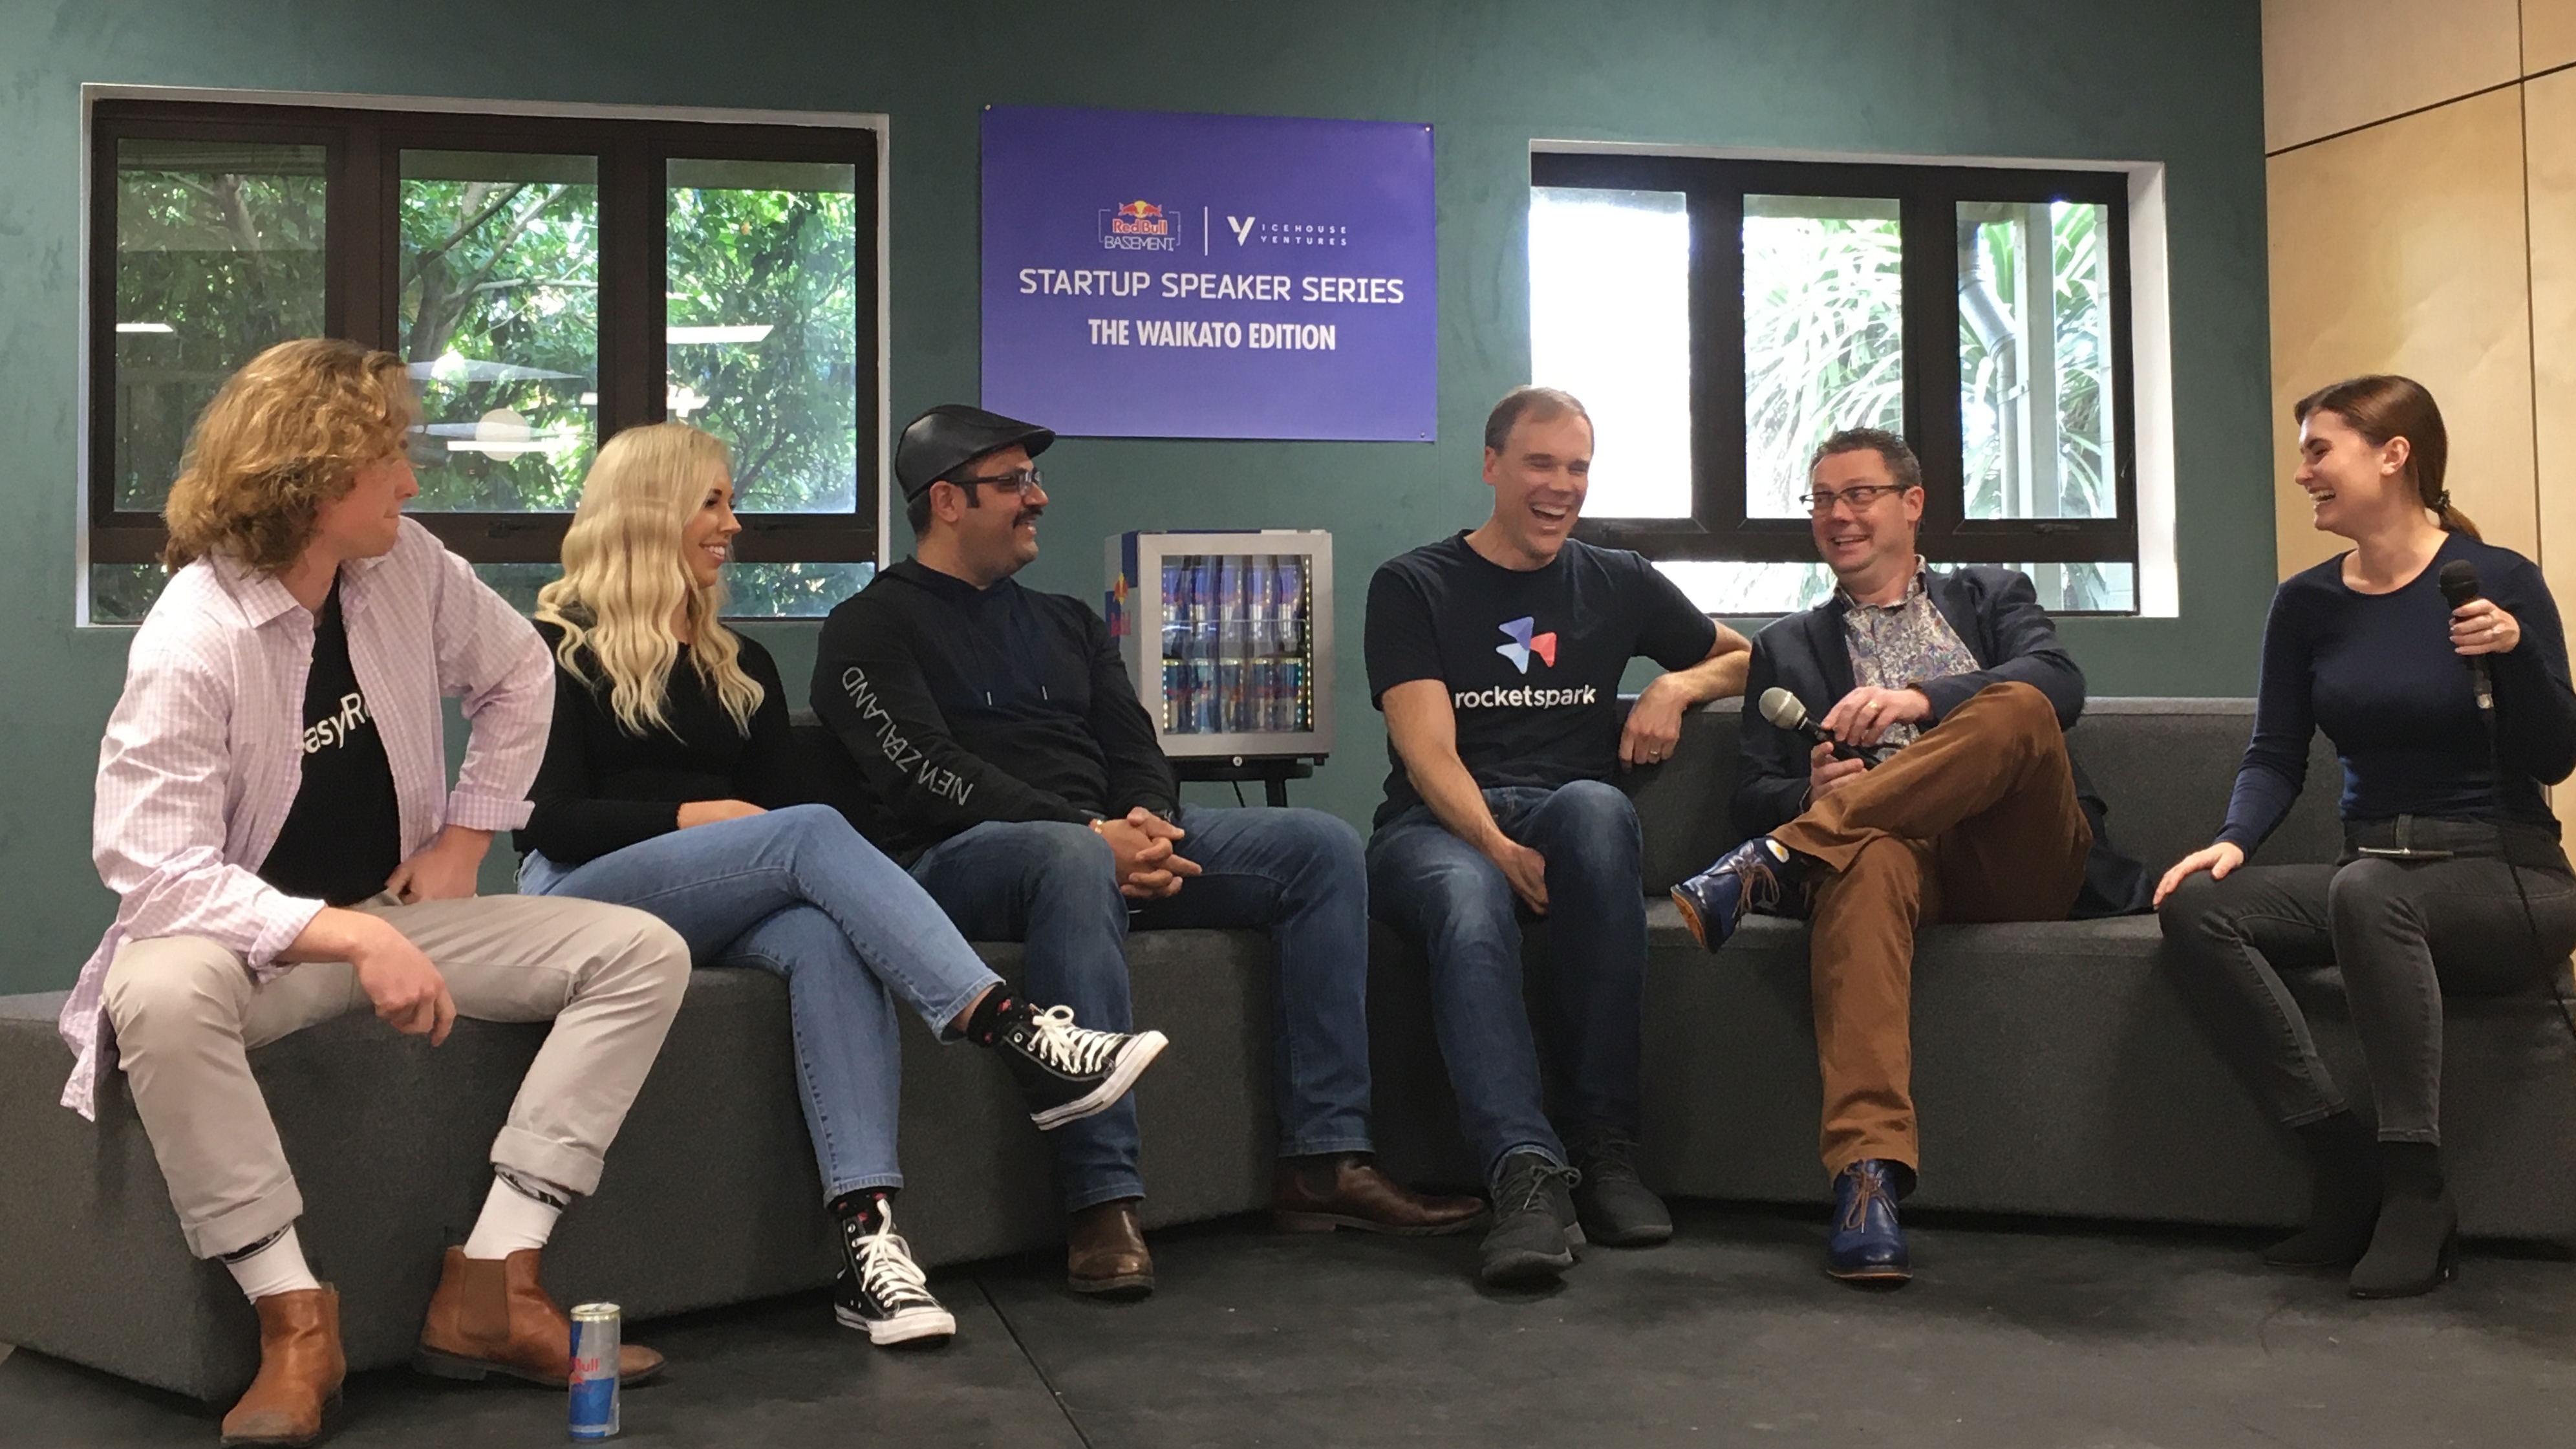 TECH TALK: The Red Bull Basement Startup Speaker Series panel enjoy a joke at the University of Waikato event.